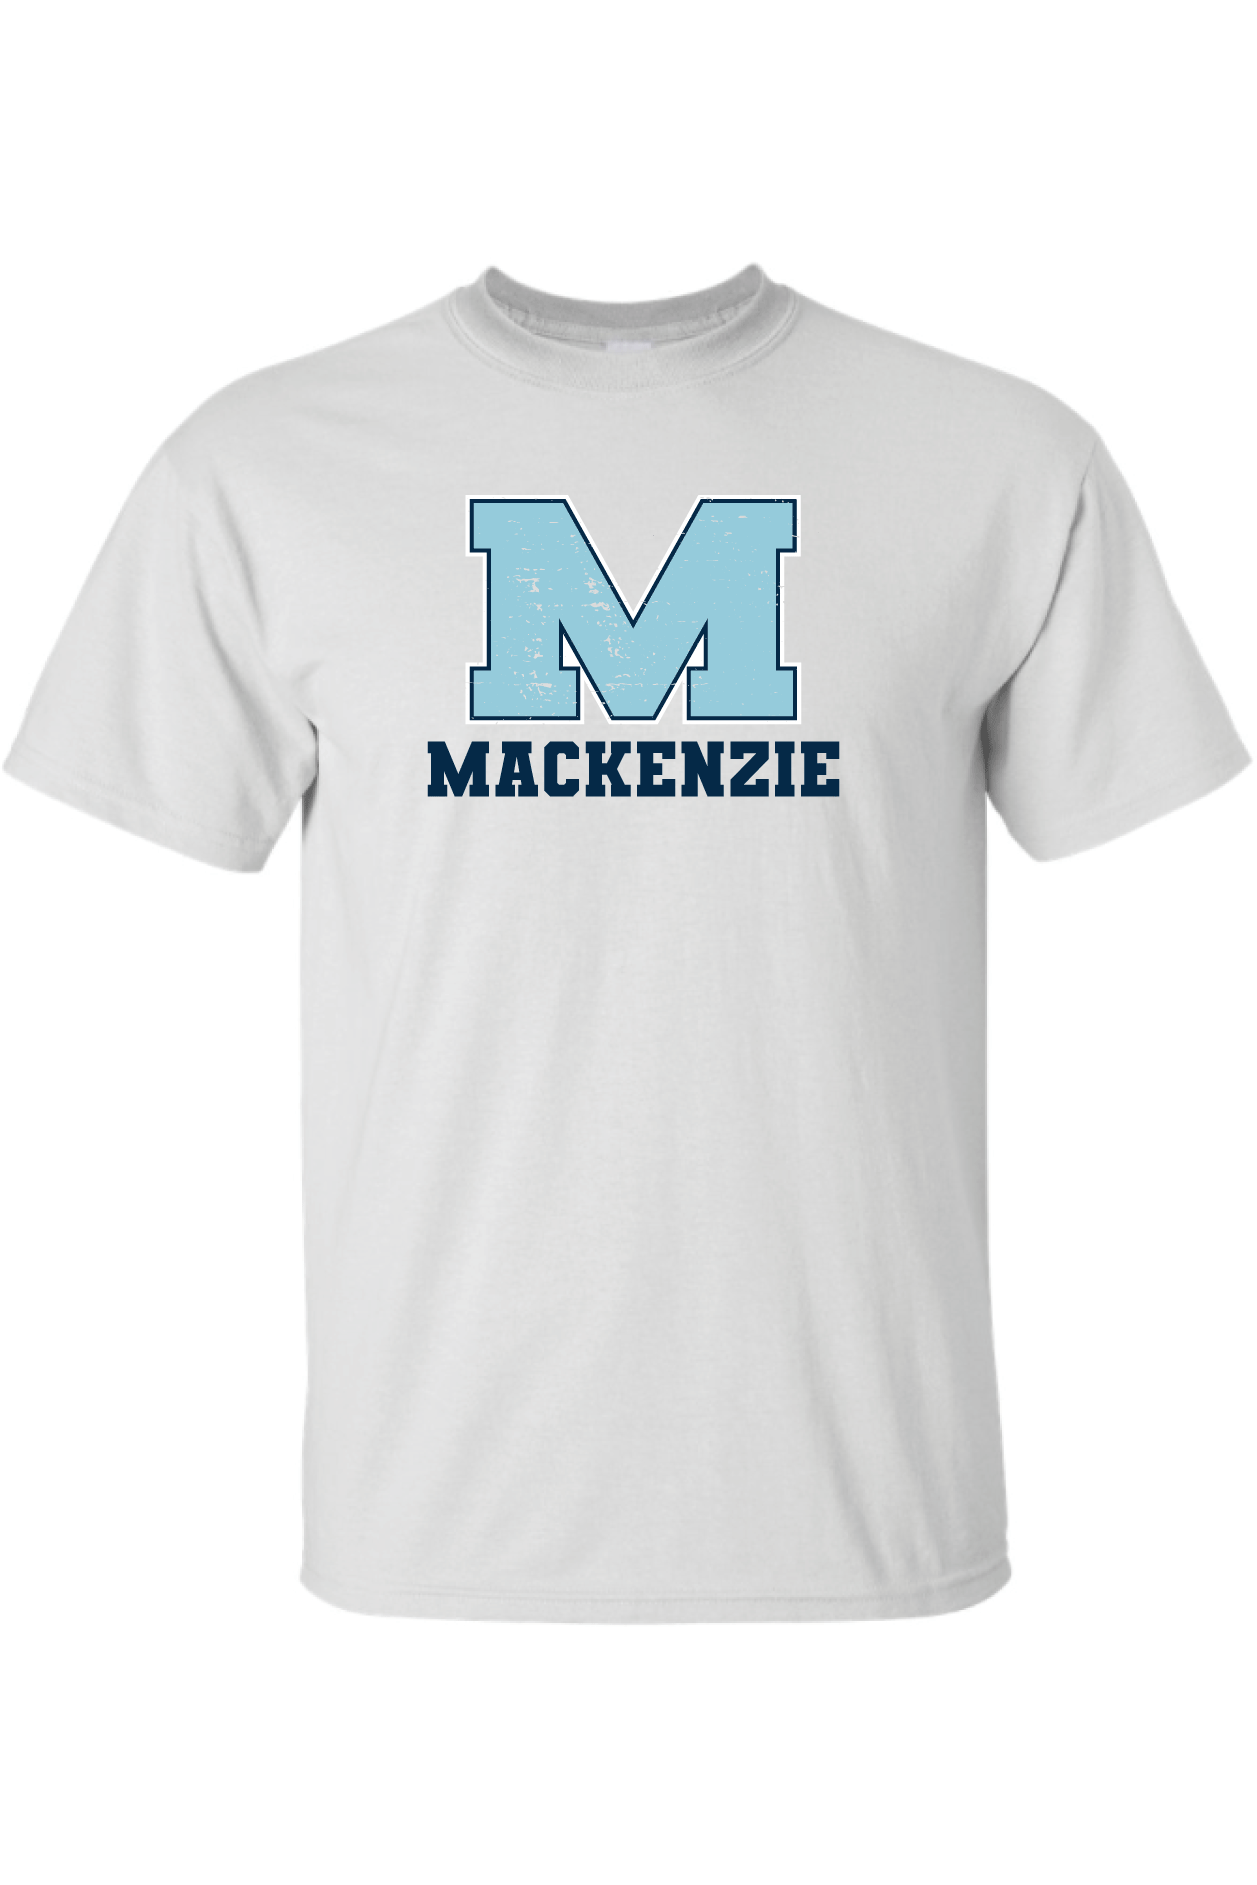 Mackenzie Youth T-Shirt (Vintage) - Oddball Workshop